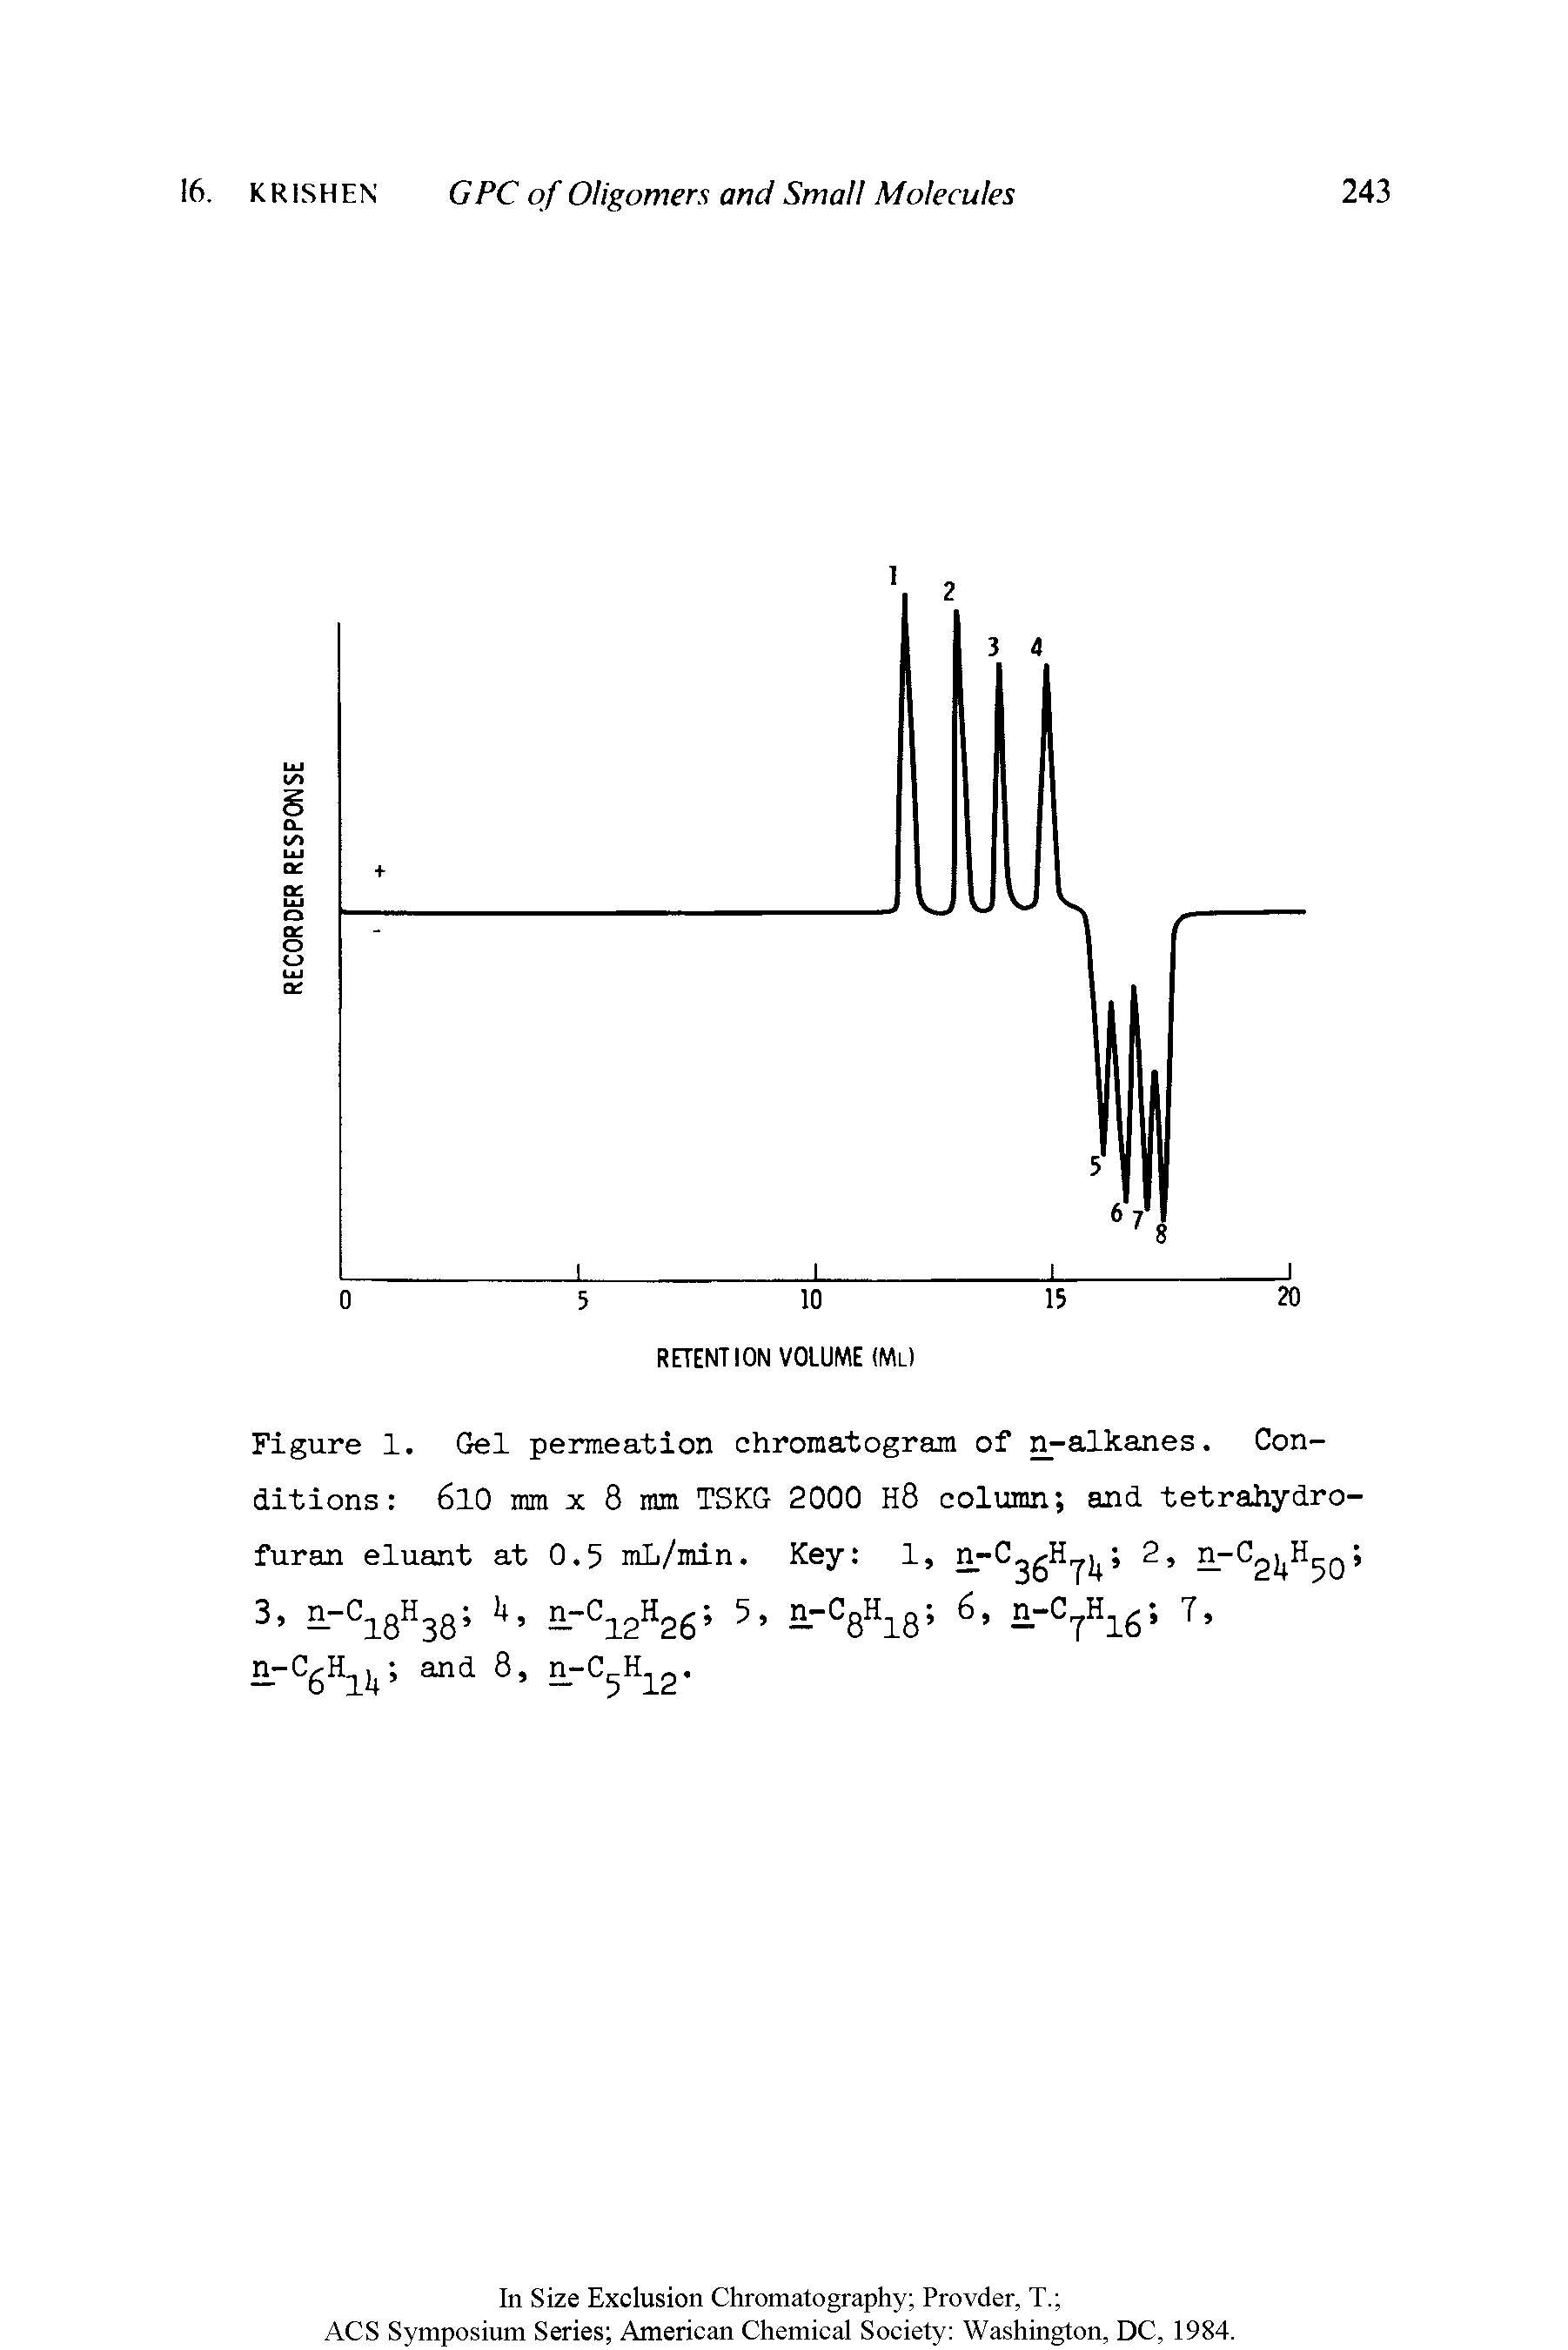 Figure 1. Gel permeation chromatogram of -alkanes. Conditions 6l0 mm X 8 mm TSKG 2000 h8 column and tetrahydro-furan eluant at 0.5 mL/mln. Key 1, 2, n...